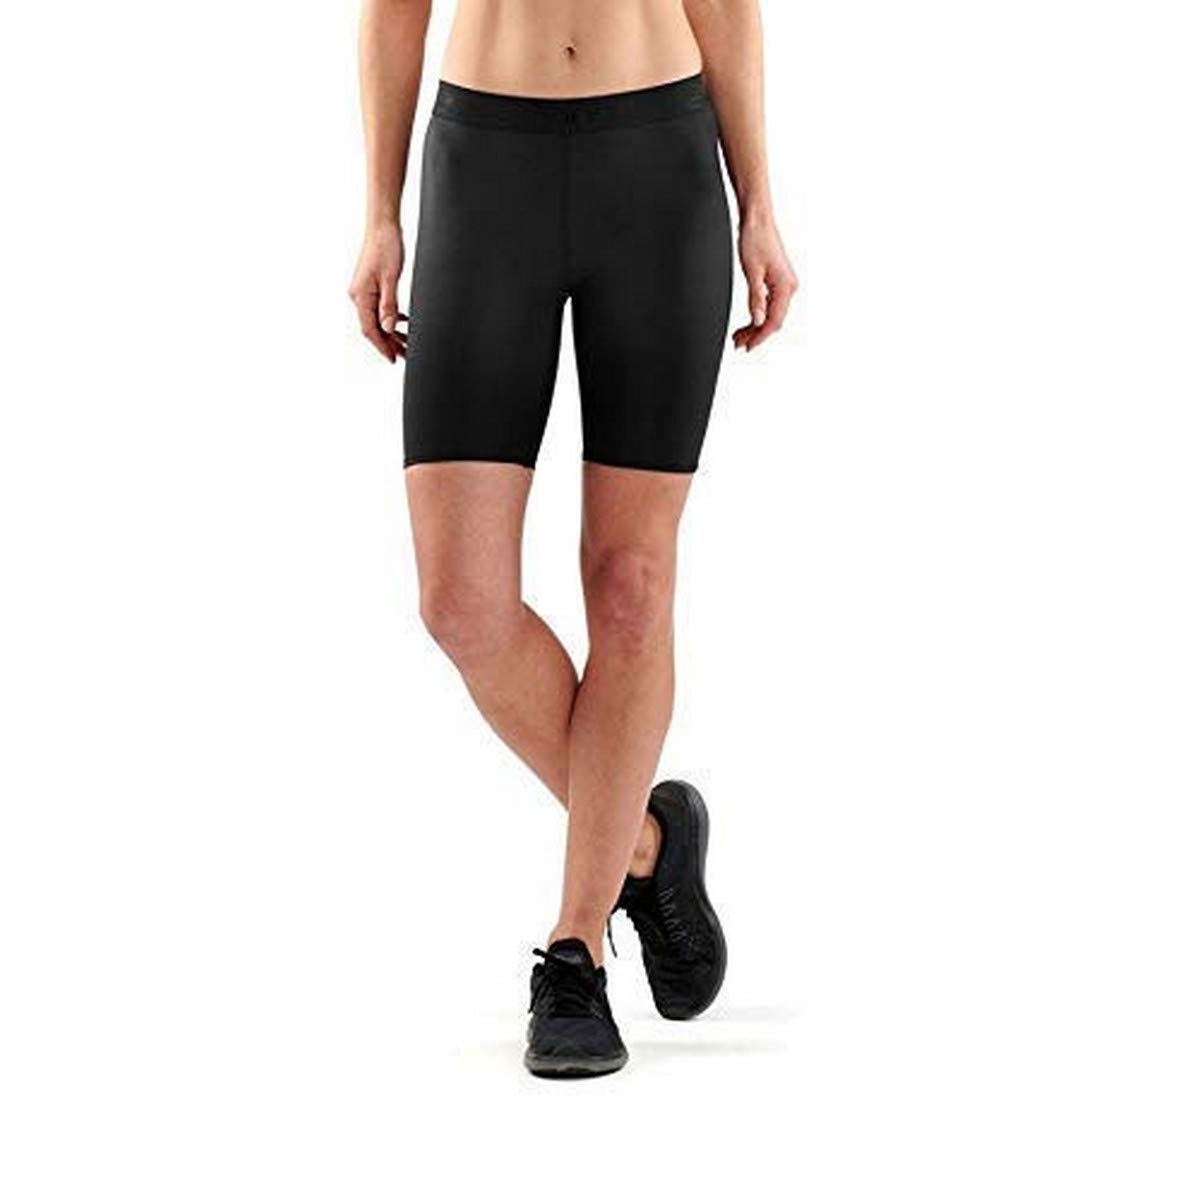 SKINS Women's Core Shorts - Black